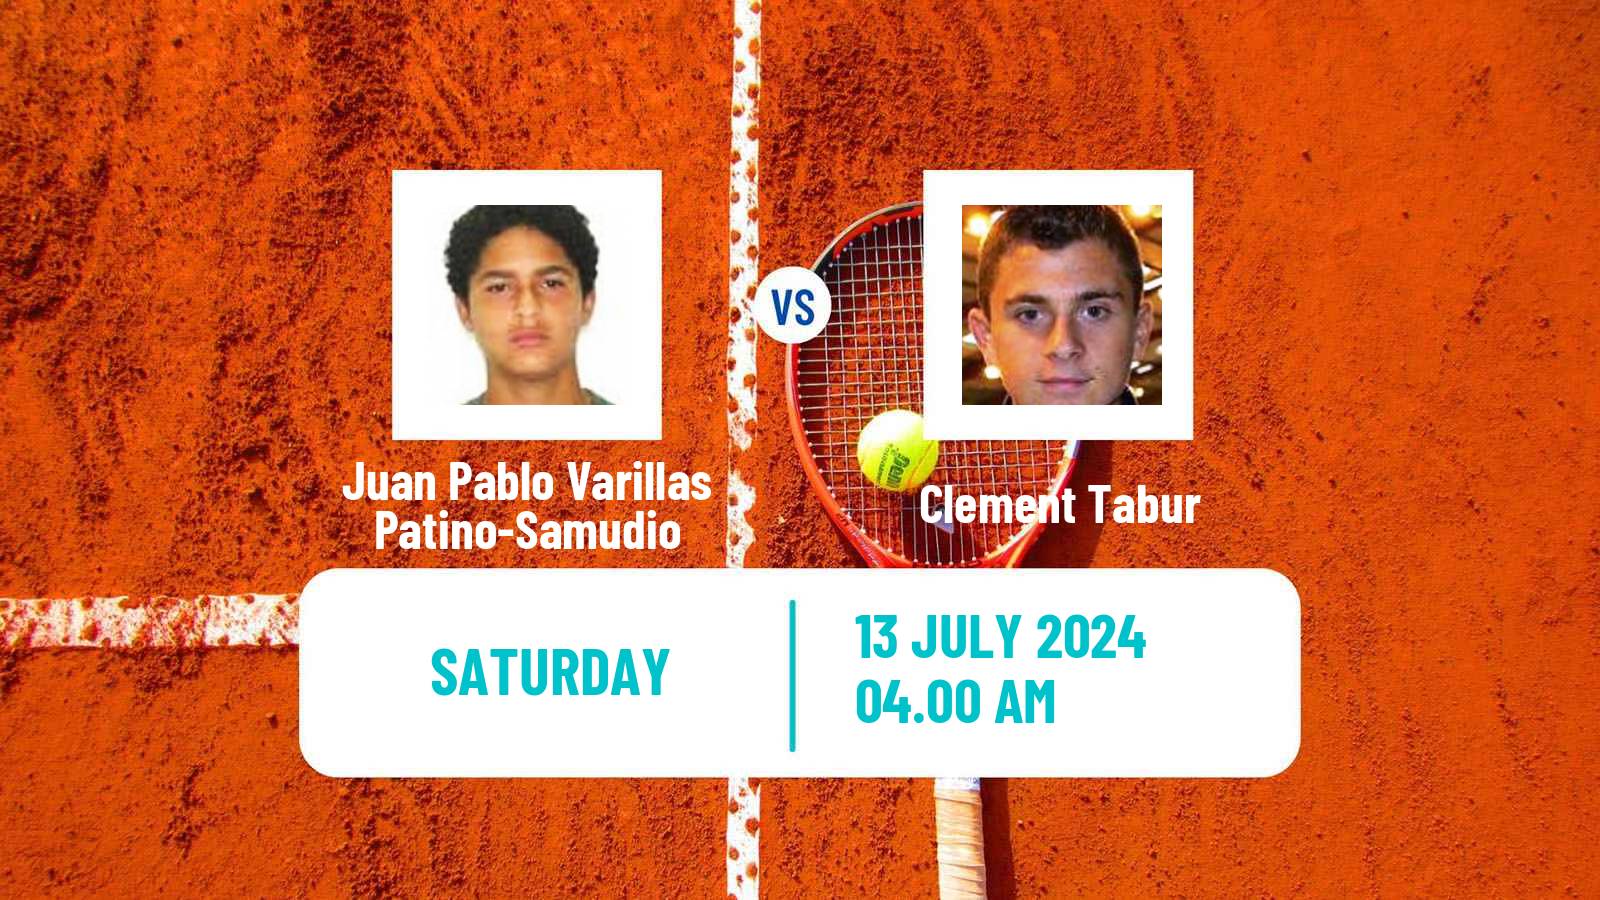 Tennis ATP Gstaad Juan Pablo Varillas Patino-Samudio - Clement Tabur